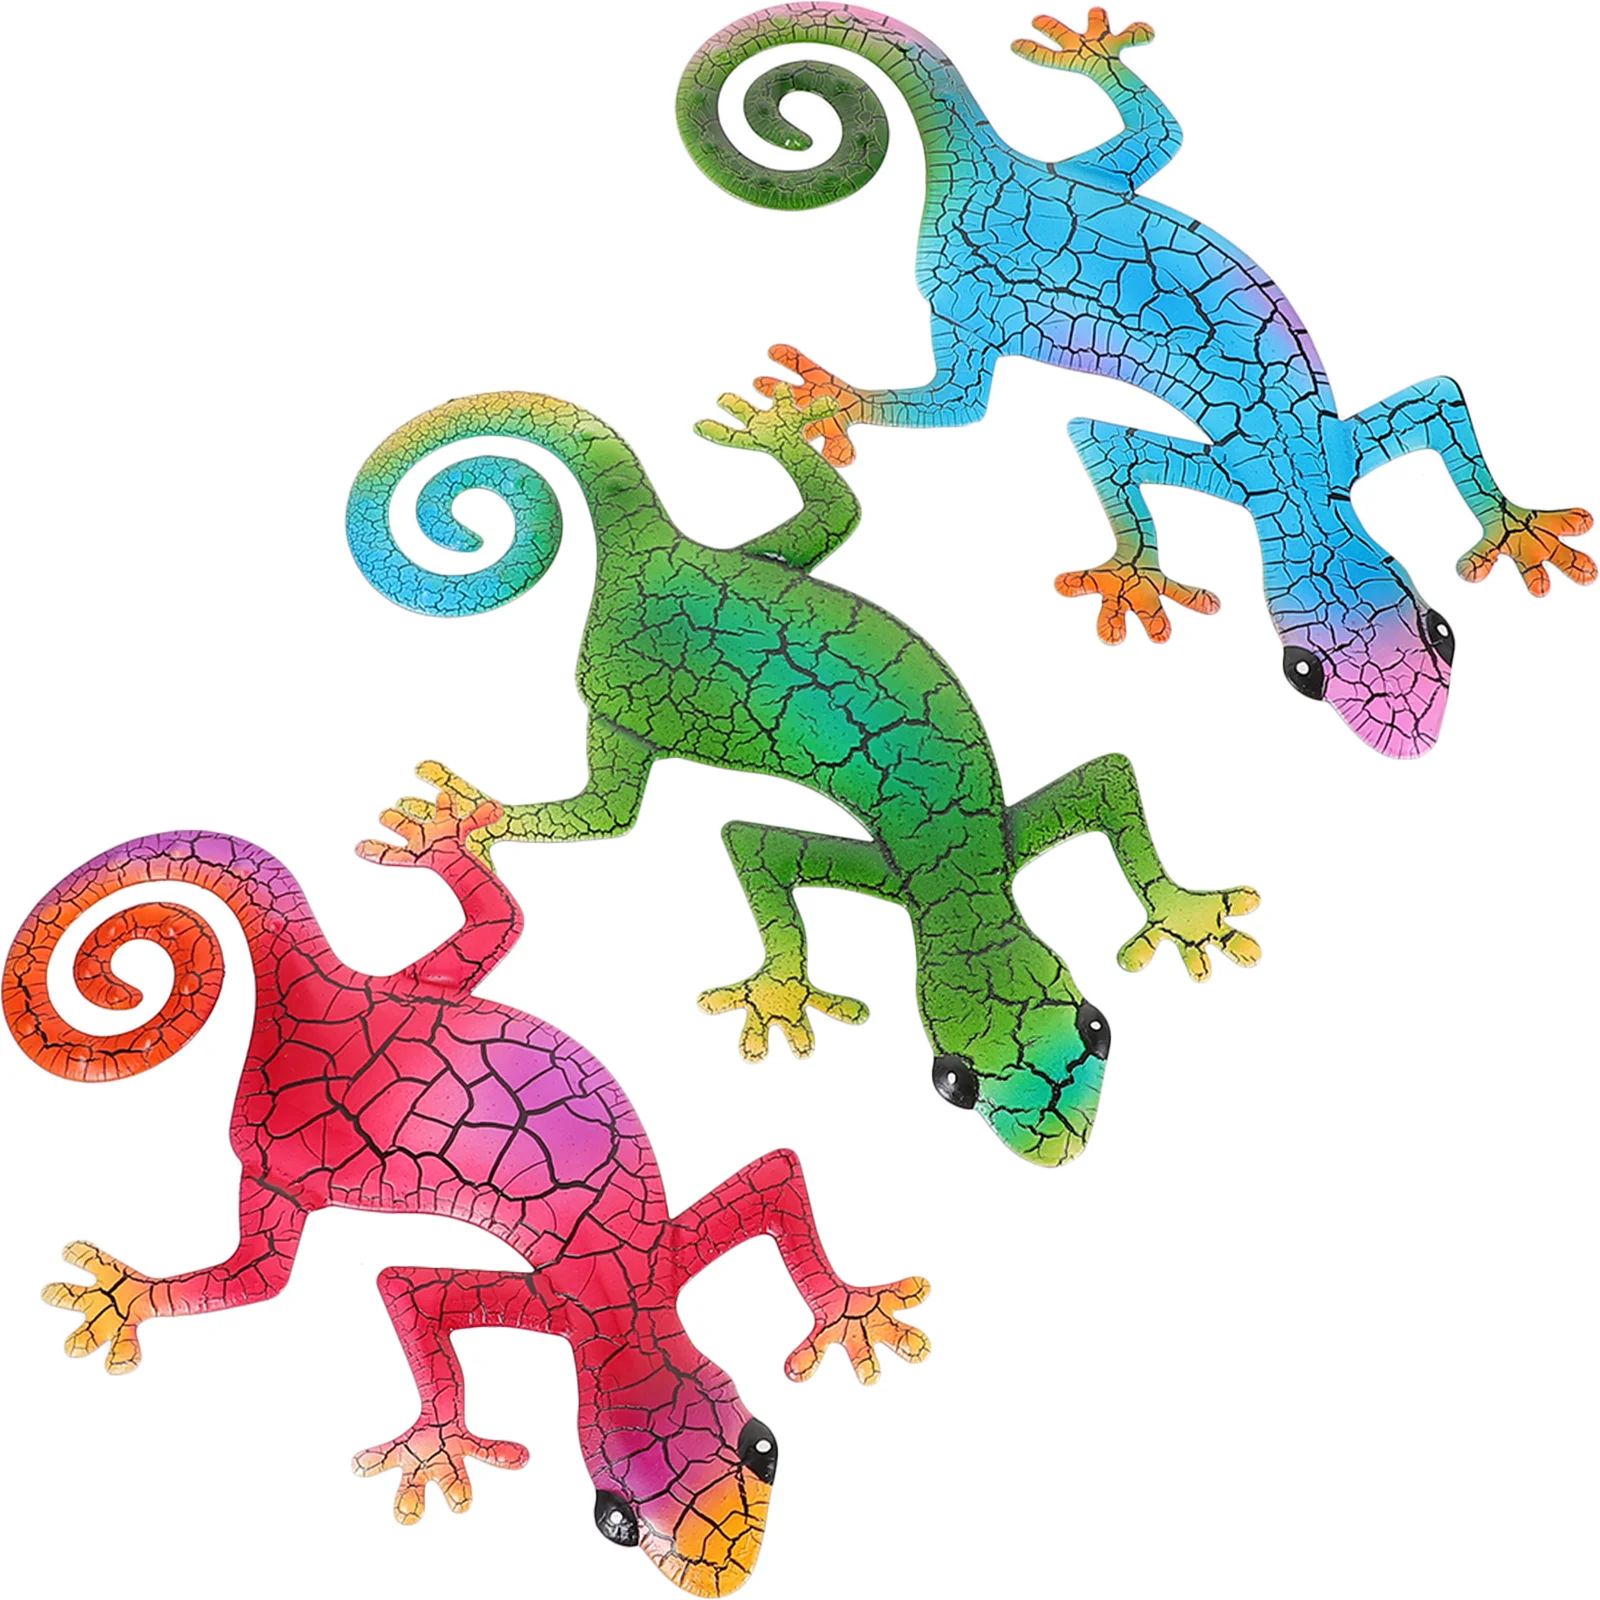 

3 Pcs Lizard Wall Decoration Gecko Decors Hanging Vintage Ornaments Crafts Decorations Home Metal Retro